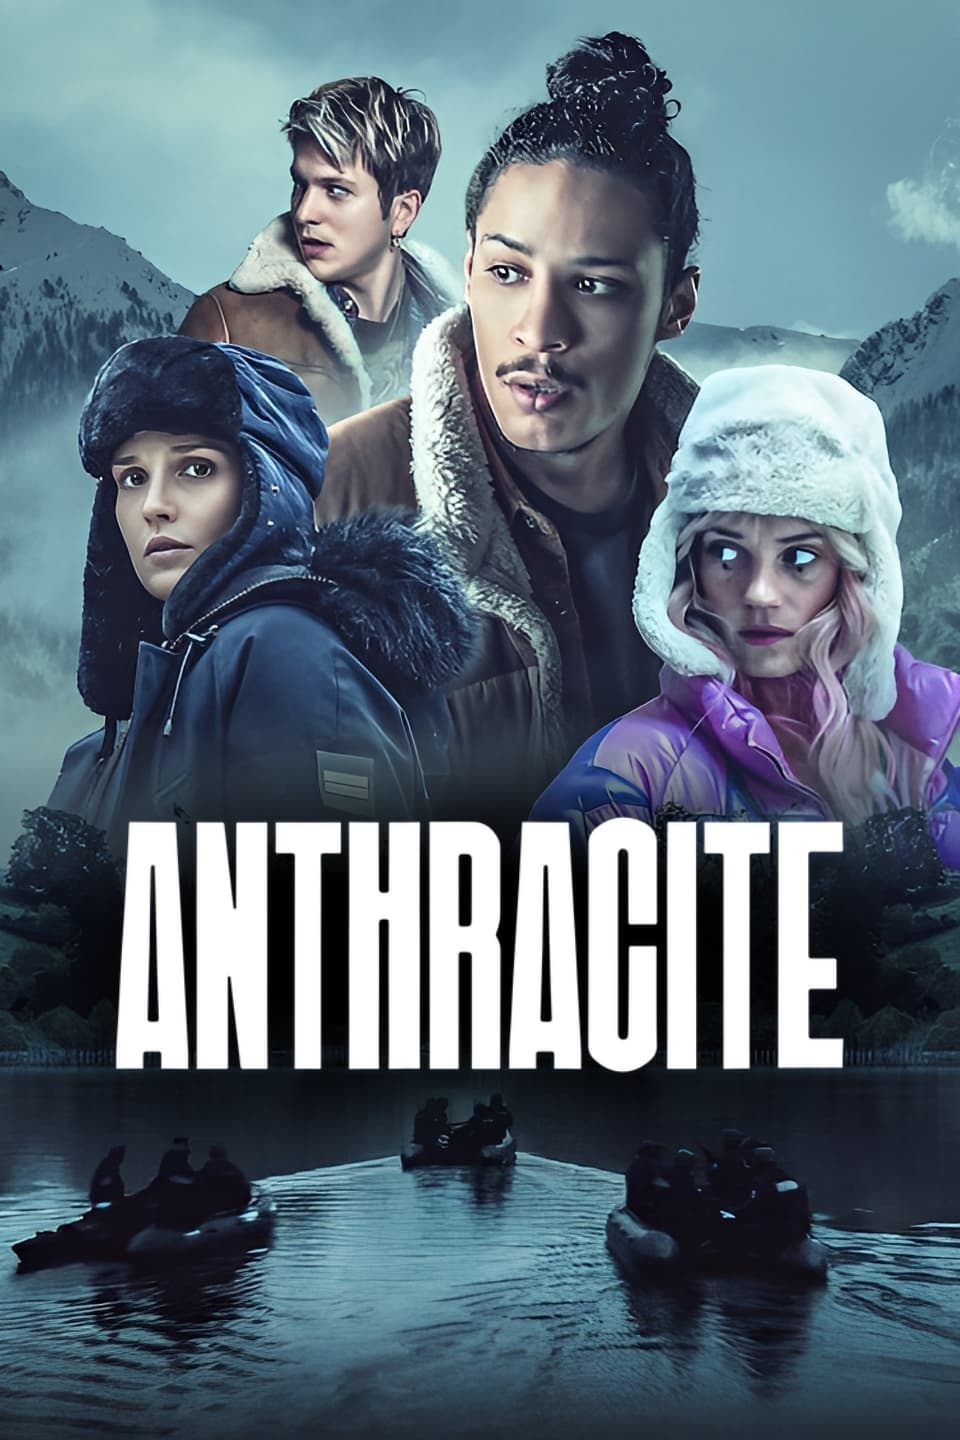 Plakát pro film “Antracit”